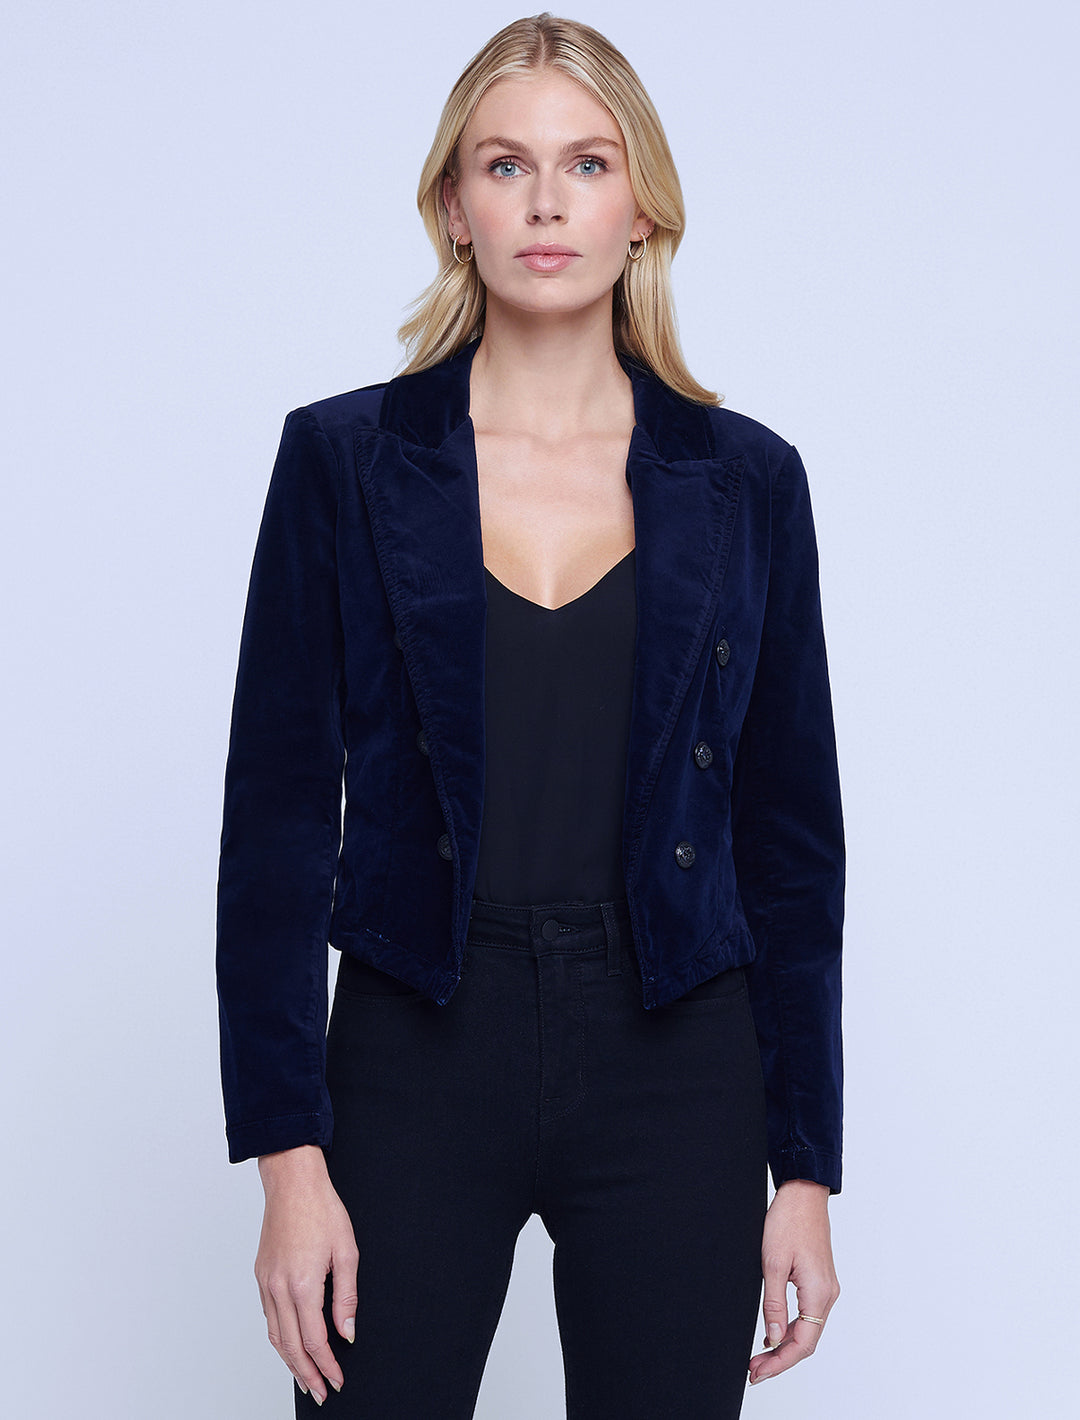 Model wearing L'agence's wayne crop double breasted jacket in dark navy velvet.